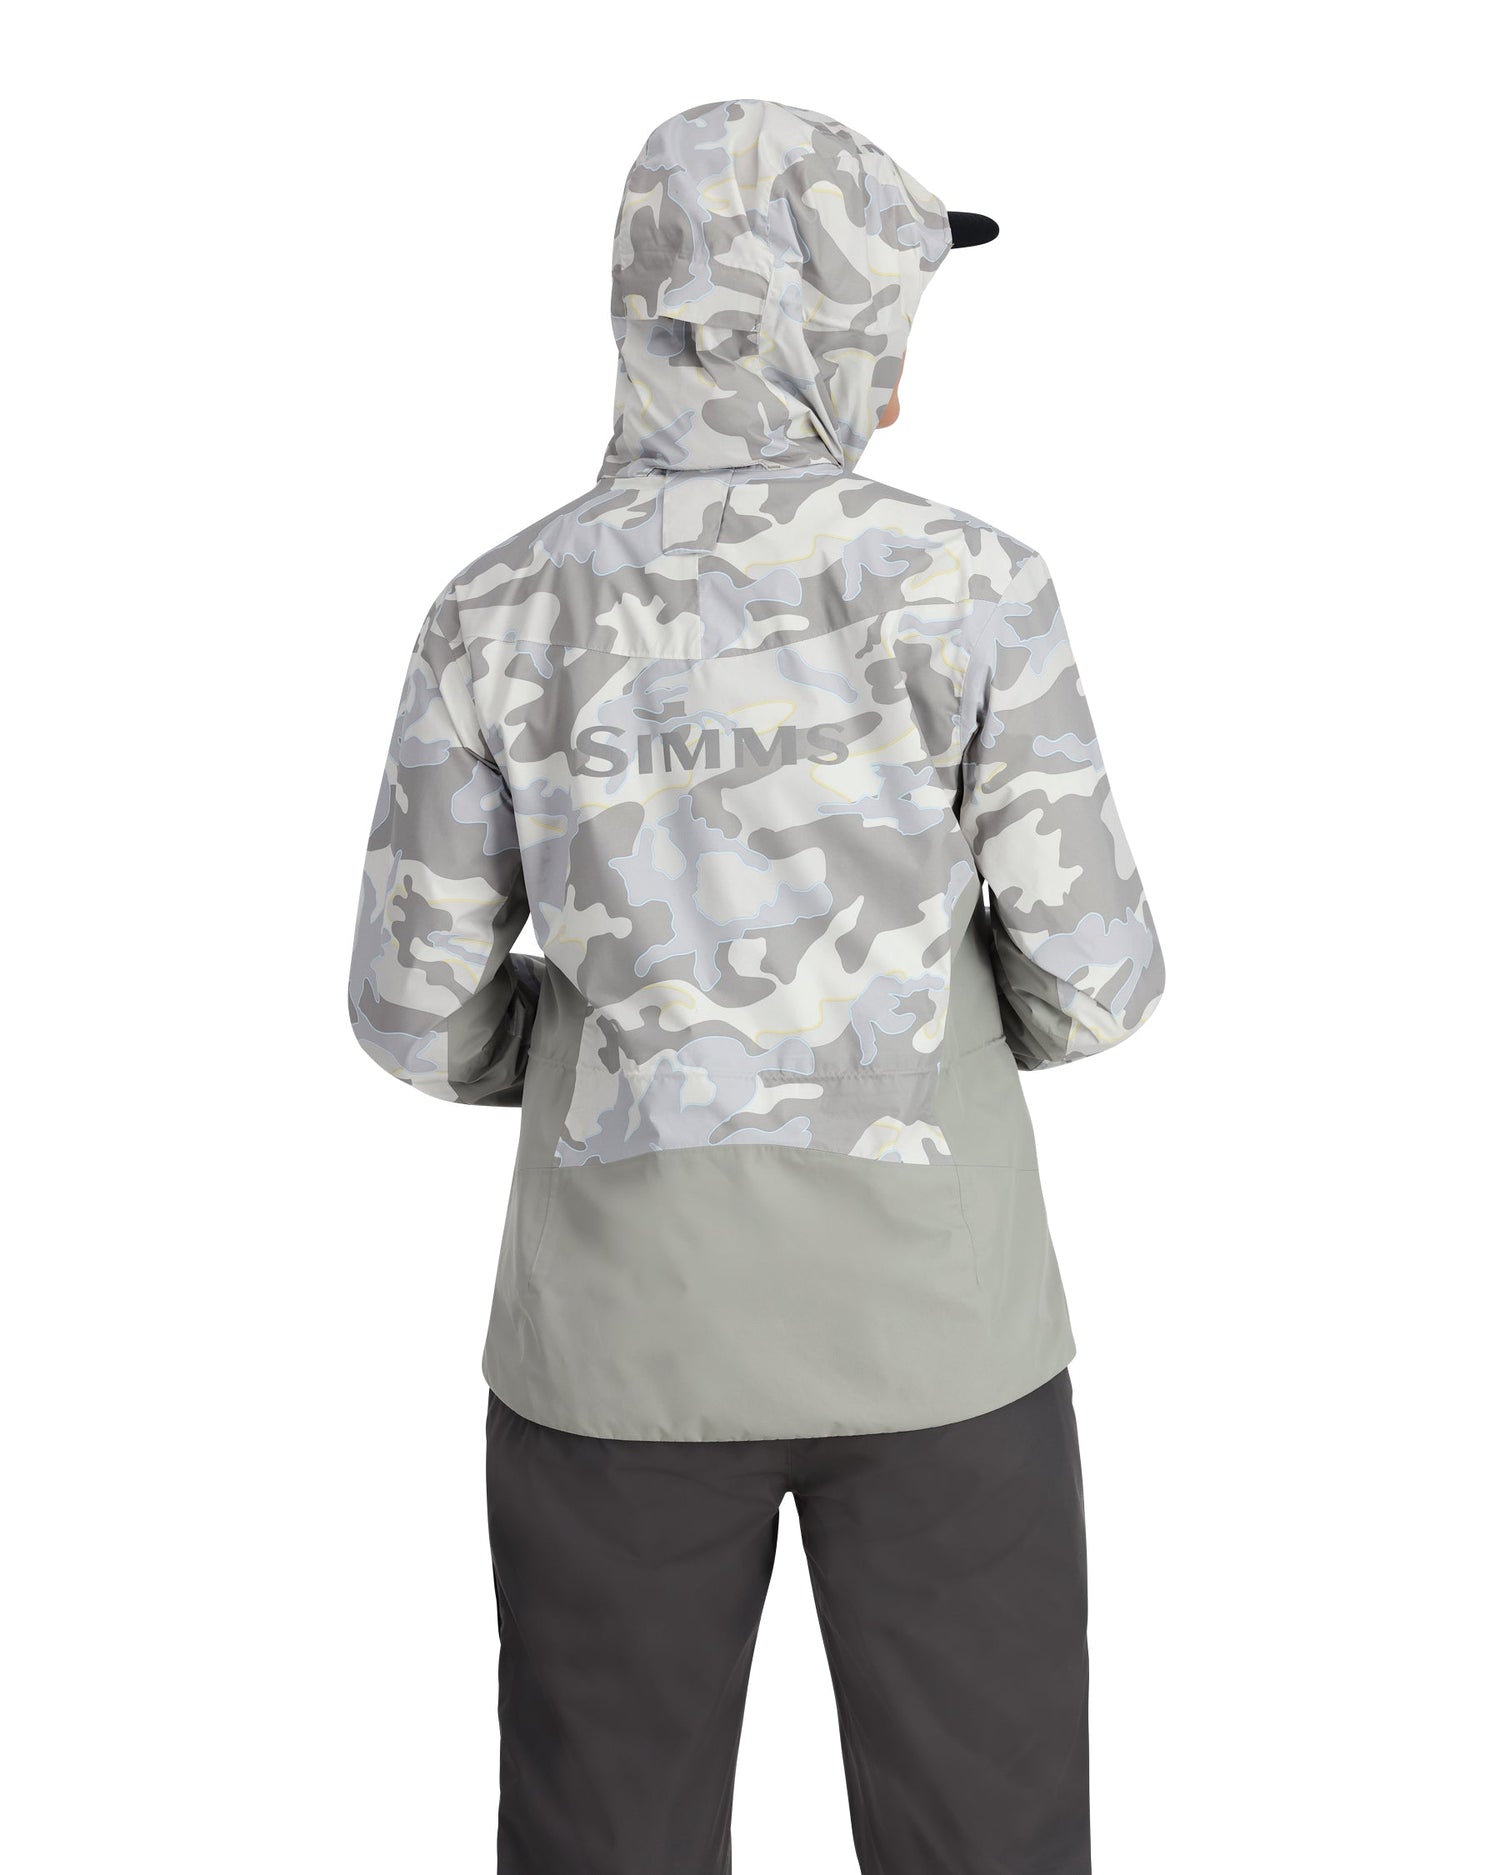 13678-685-simms-challenger-jacket-model